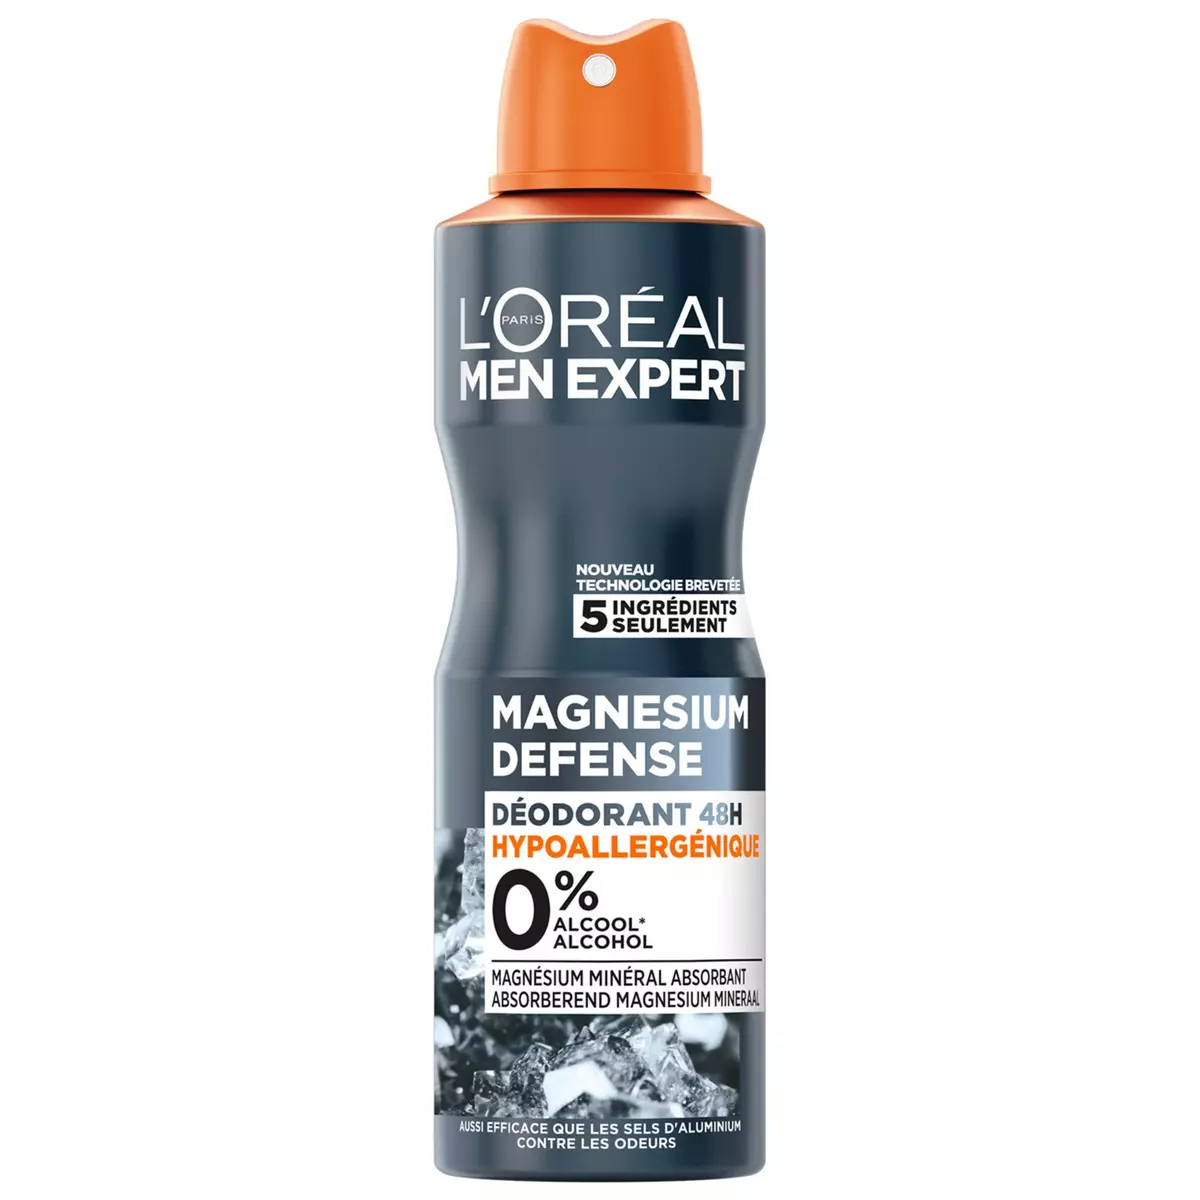 L'OREAL Men expert magnesium defense déodorant 48h hypoallergénique 150ml